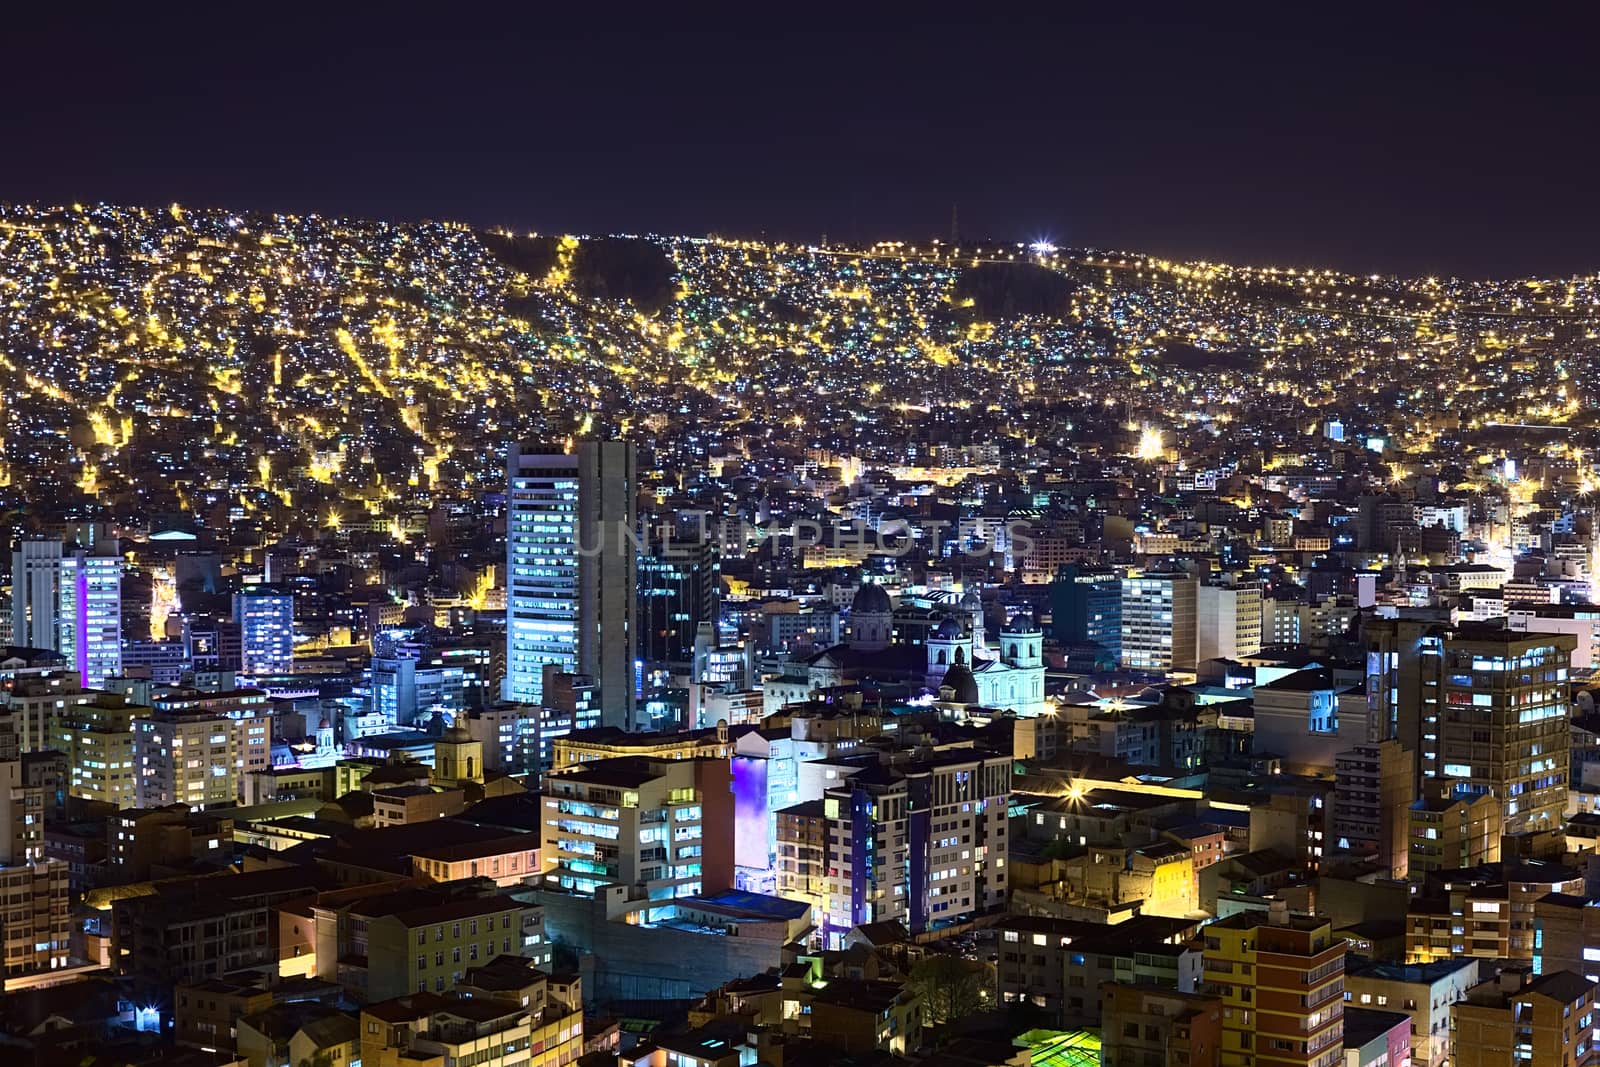 City Center of La Paz, Bolivia at Night by sven